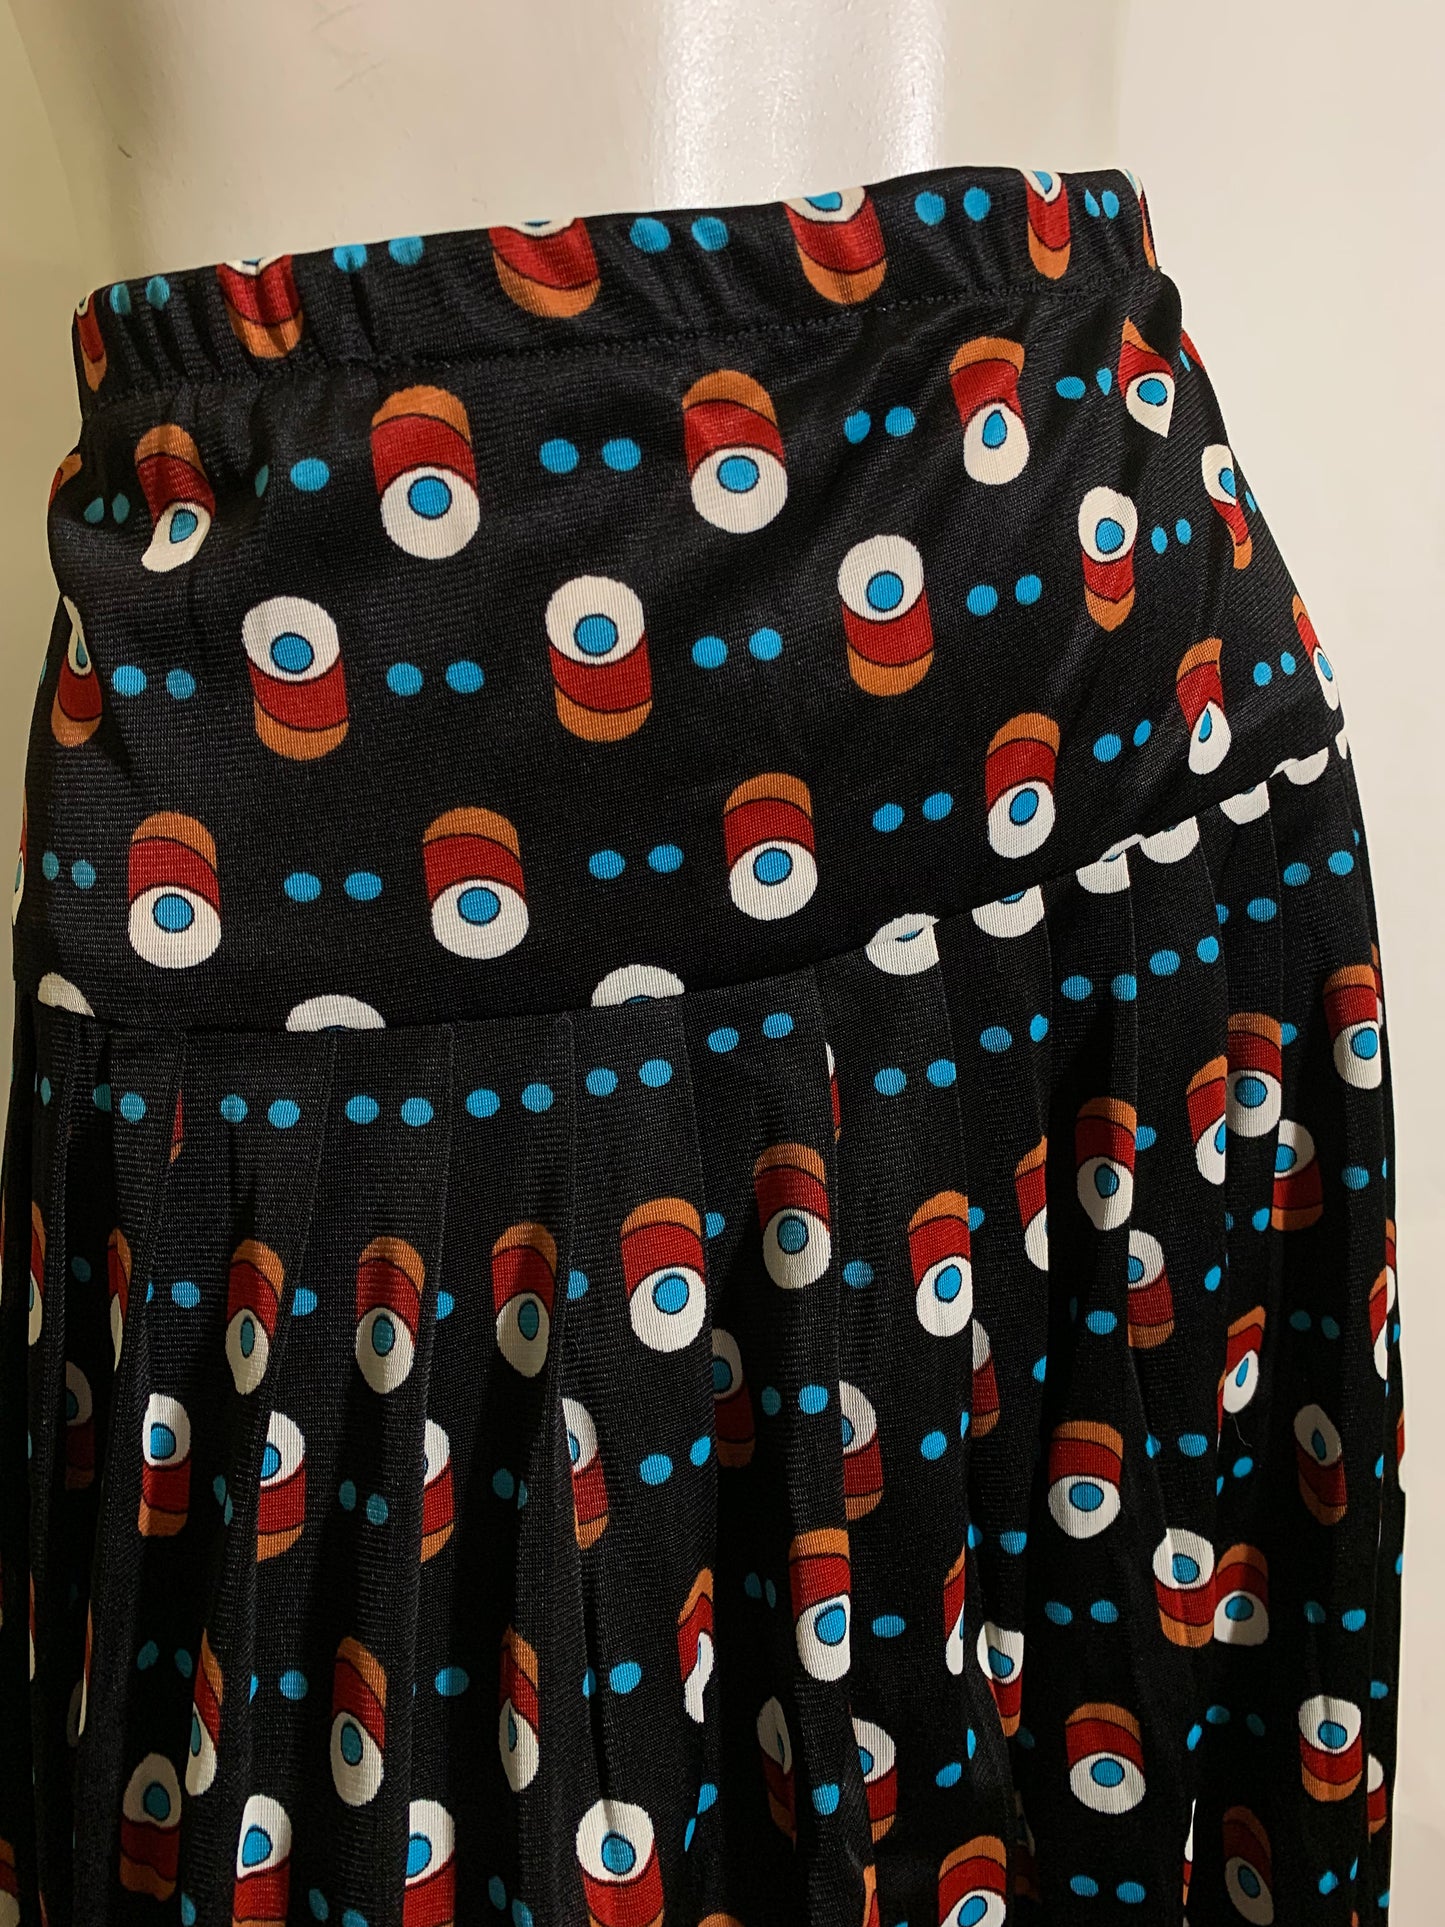 Nylon Jersey Pleated Abstract Polka Dot Skirt circa 1970s